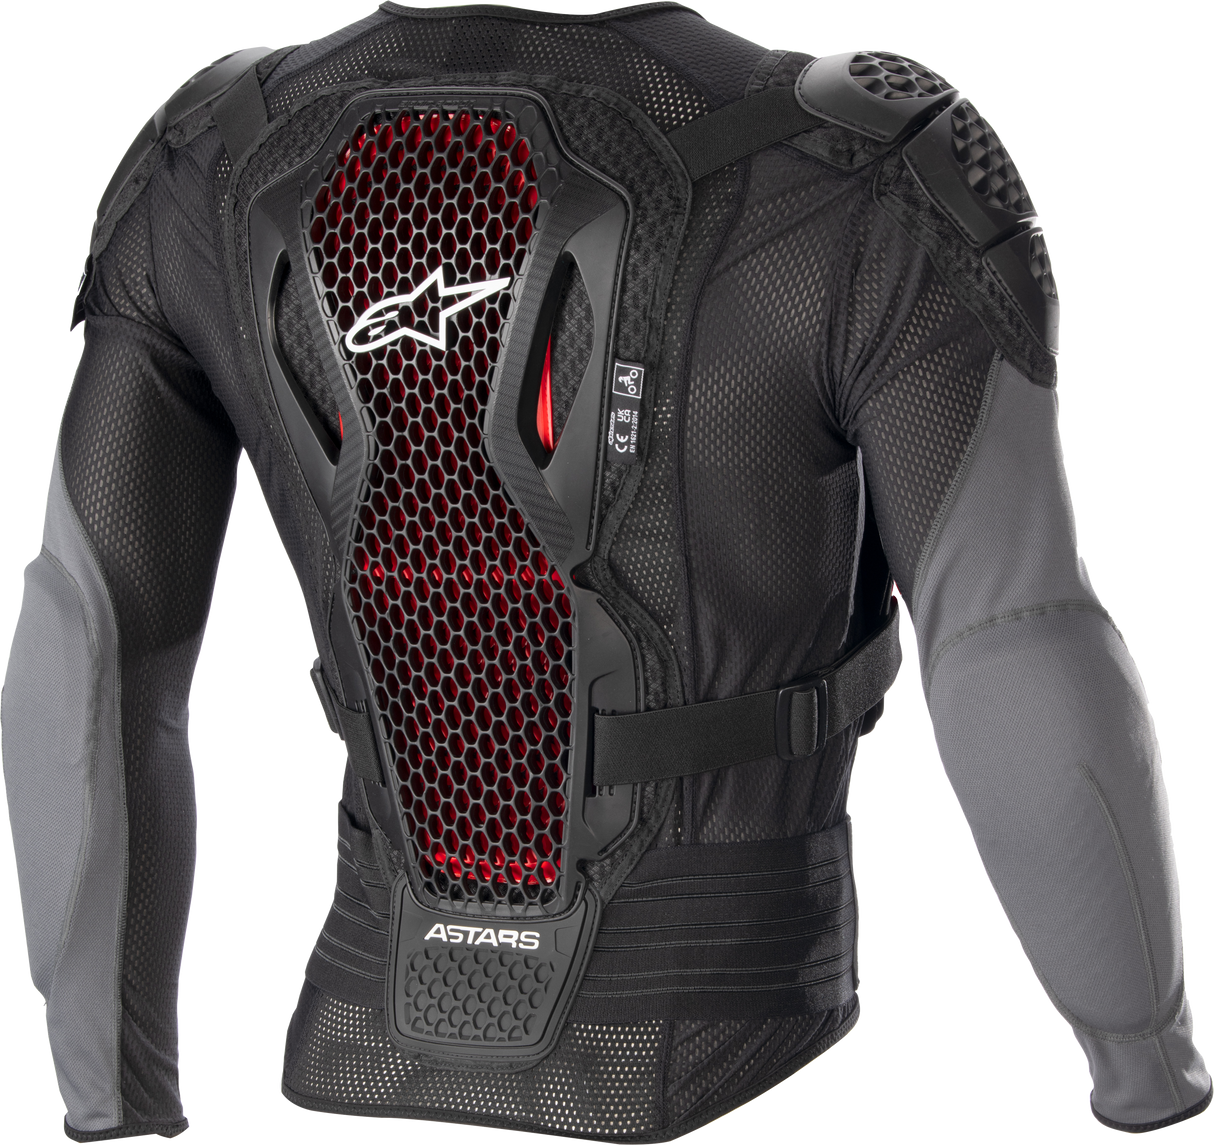 Bionic Plus V2 Protection Jacket Black/Anthracite/Red Lg